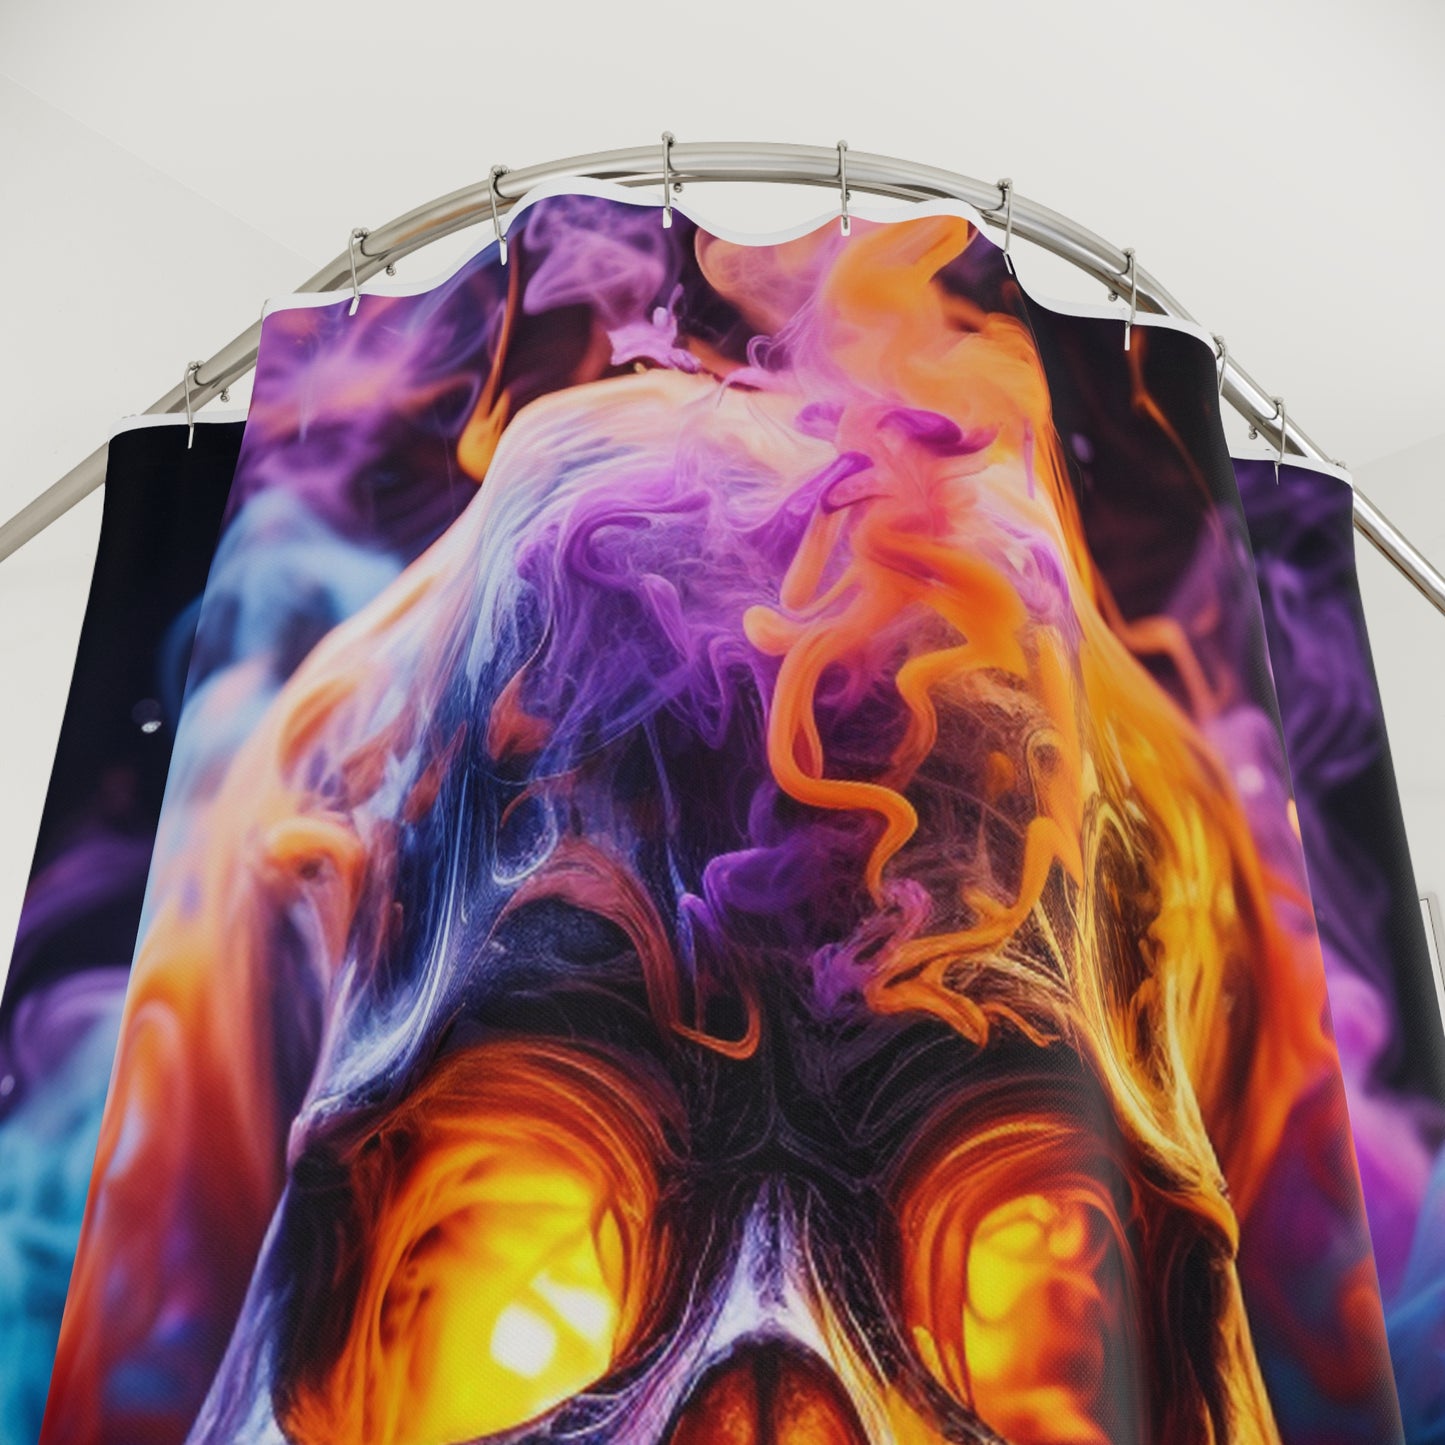 Polyester Shower Curtain Macro Skull 2